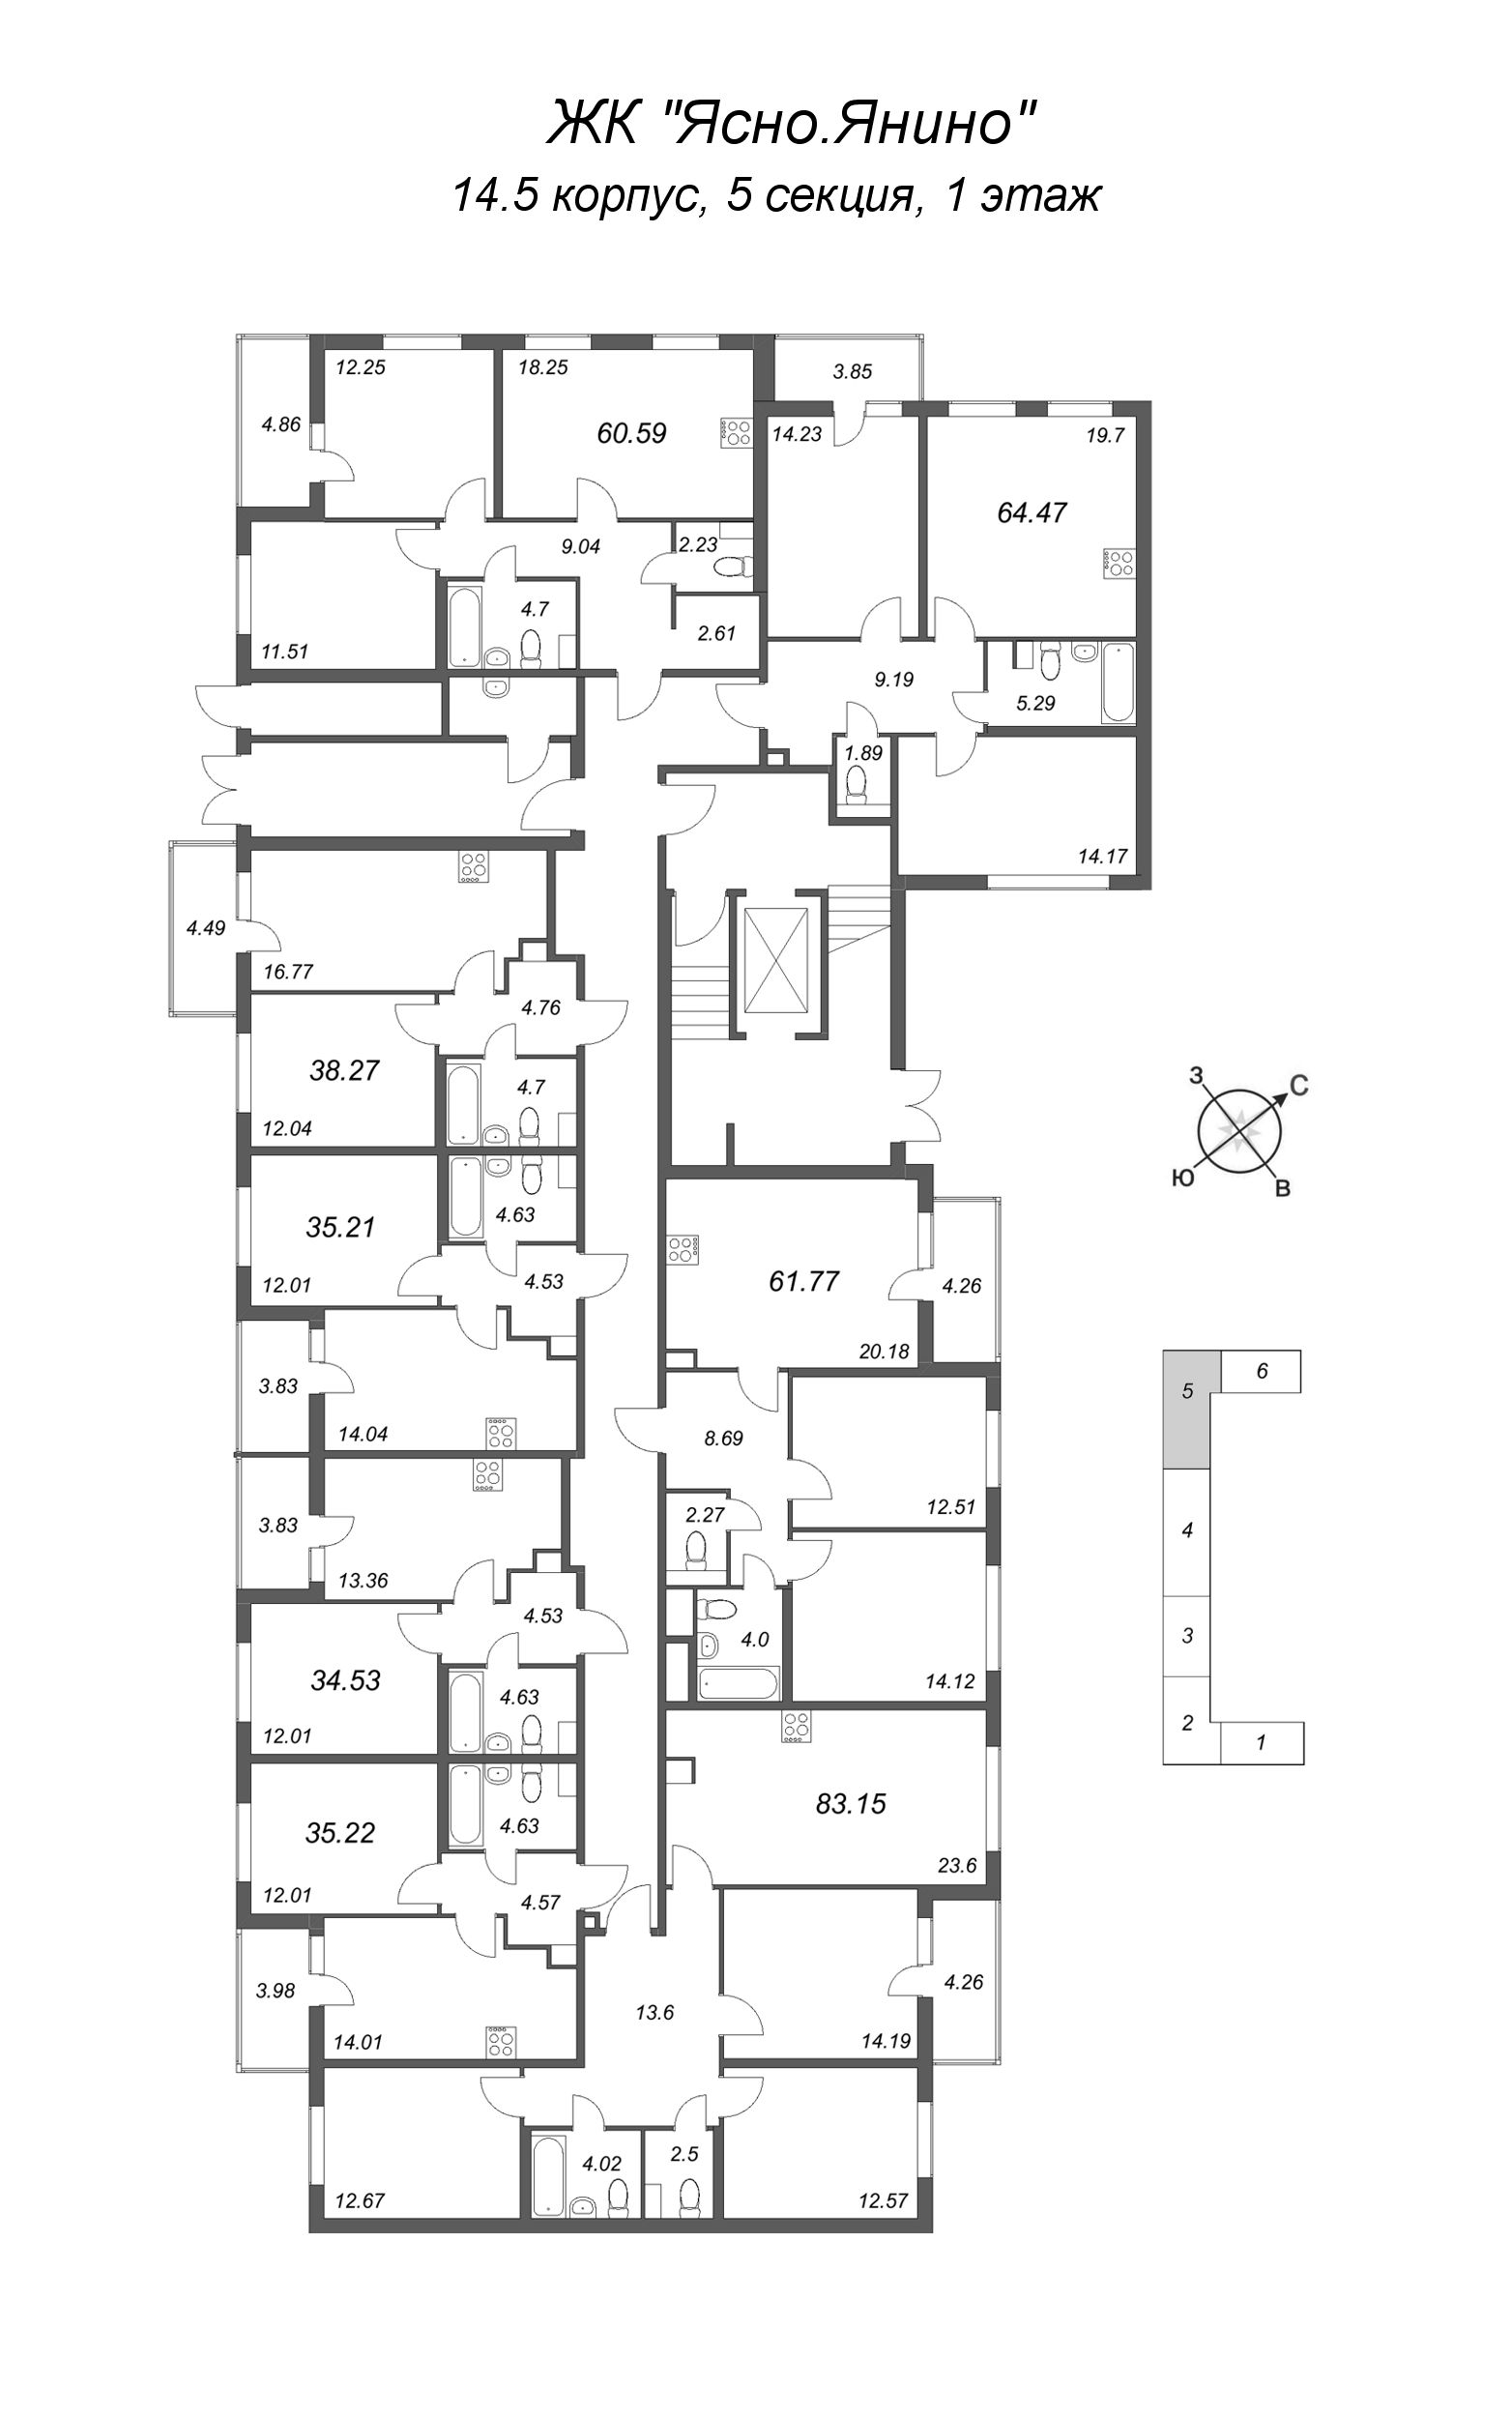 1-комнатная квартира, 35.22 м² в ЖК "Ясно.Янино" - планировка этажа